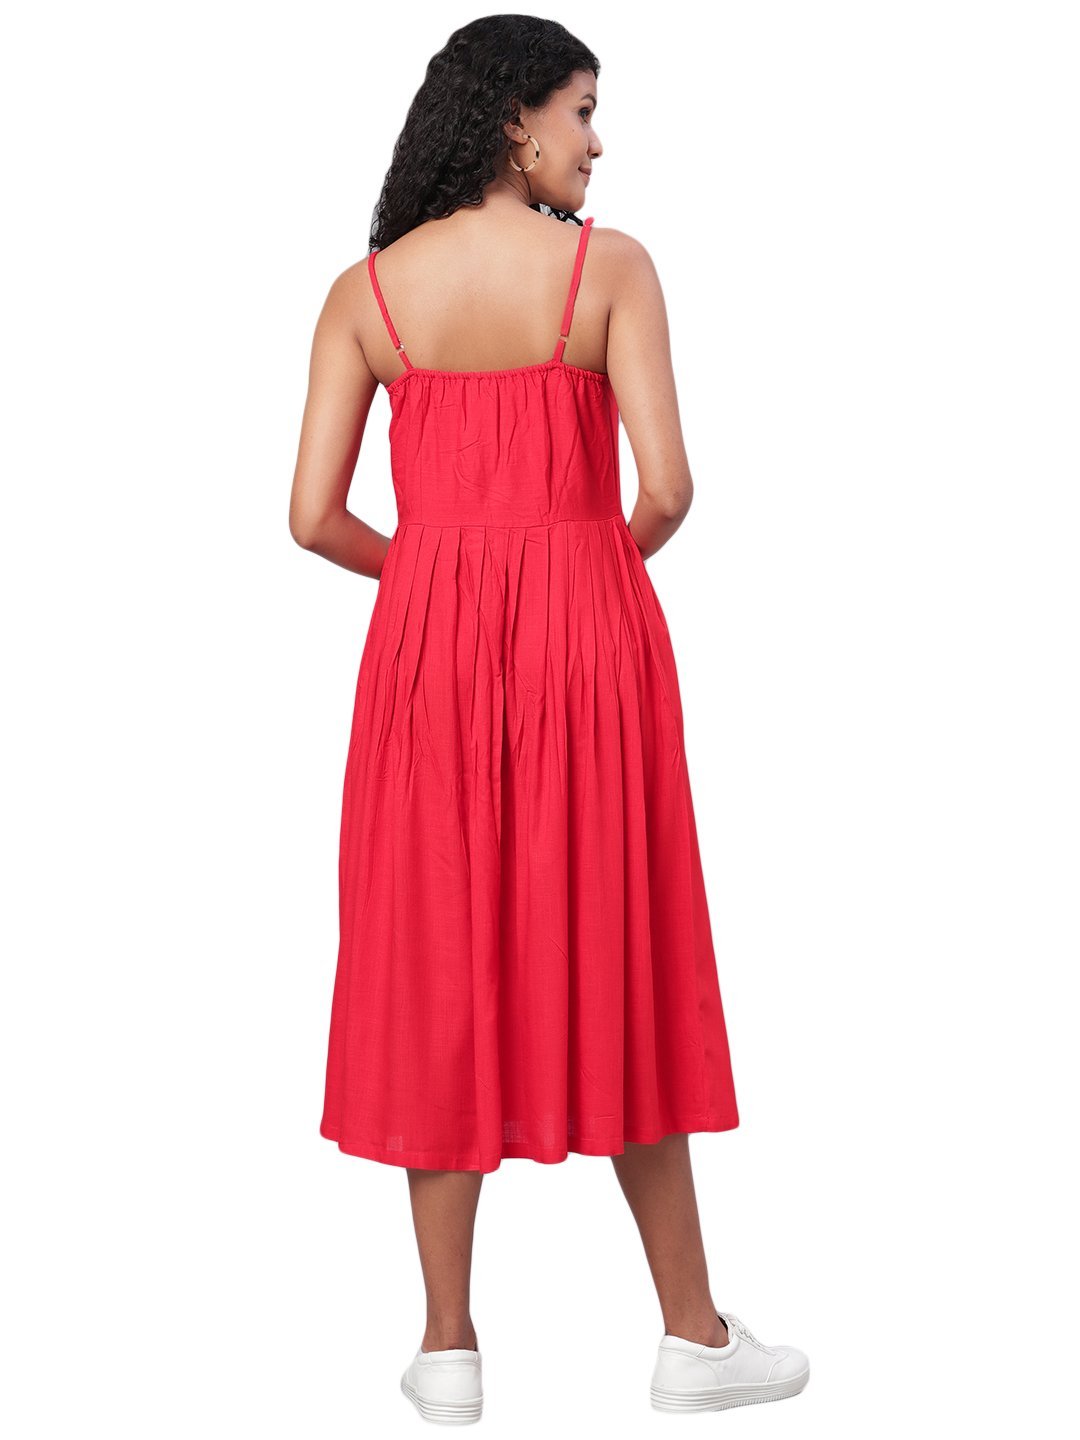 Women's Red Printed Sleeveless Cotton Slub Streps Neck Casual Dress - Myshka